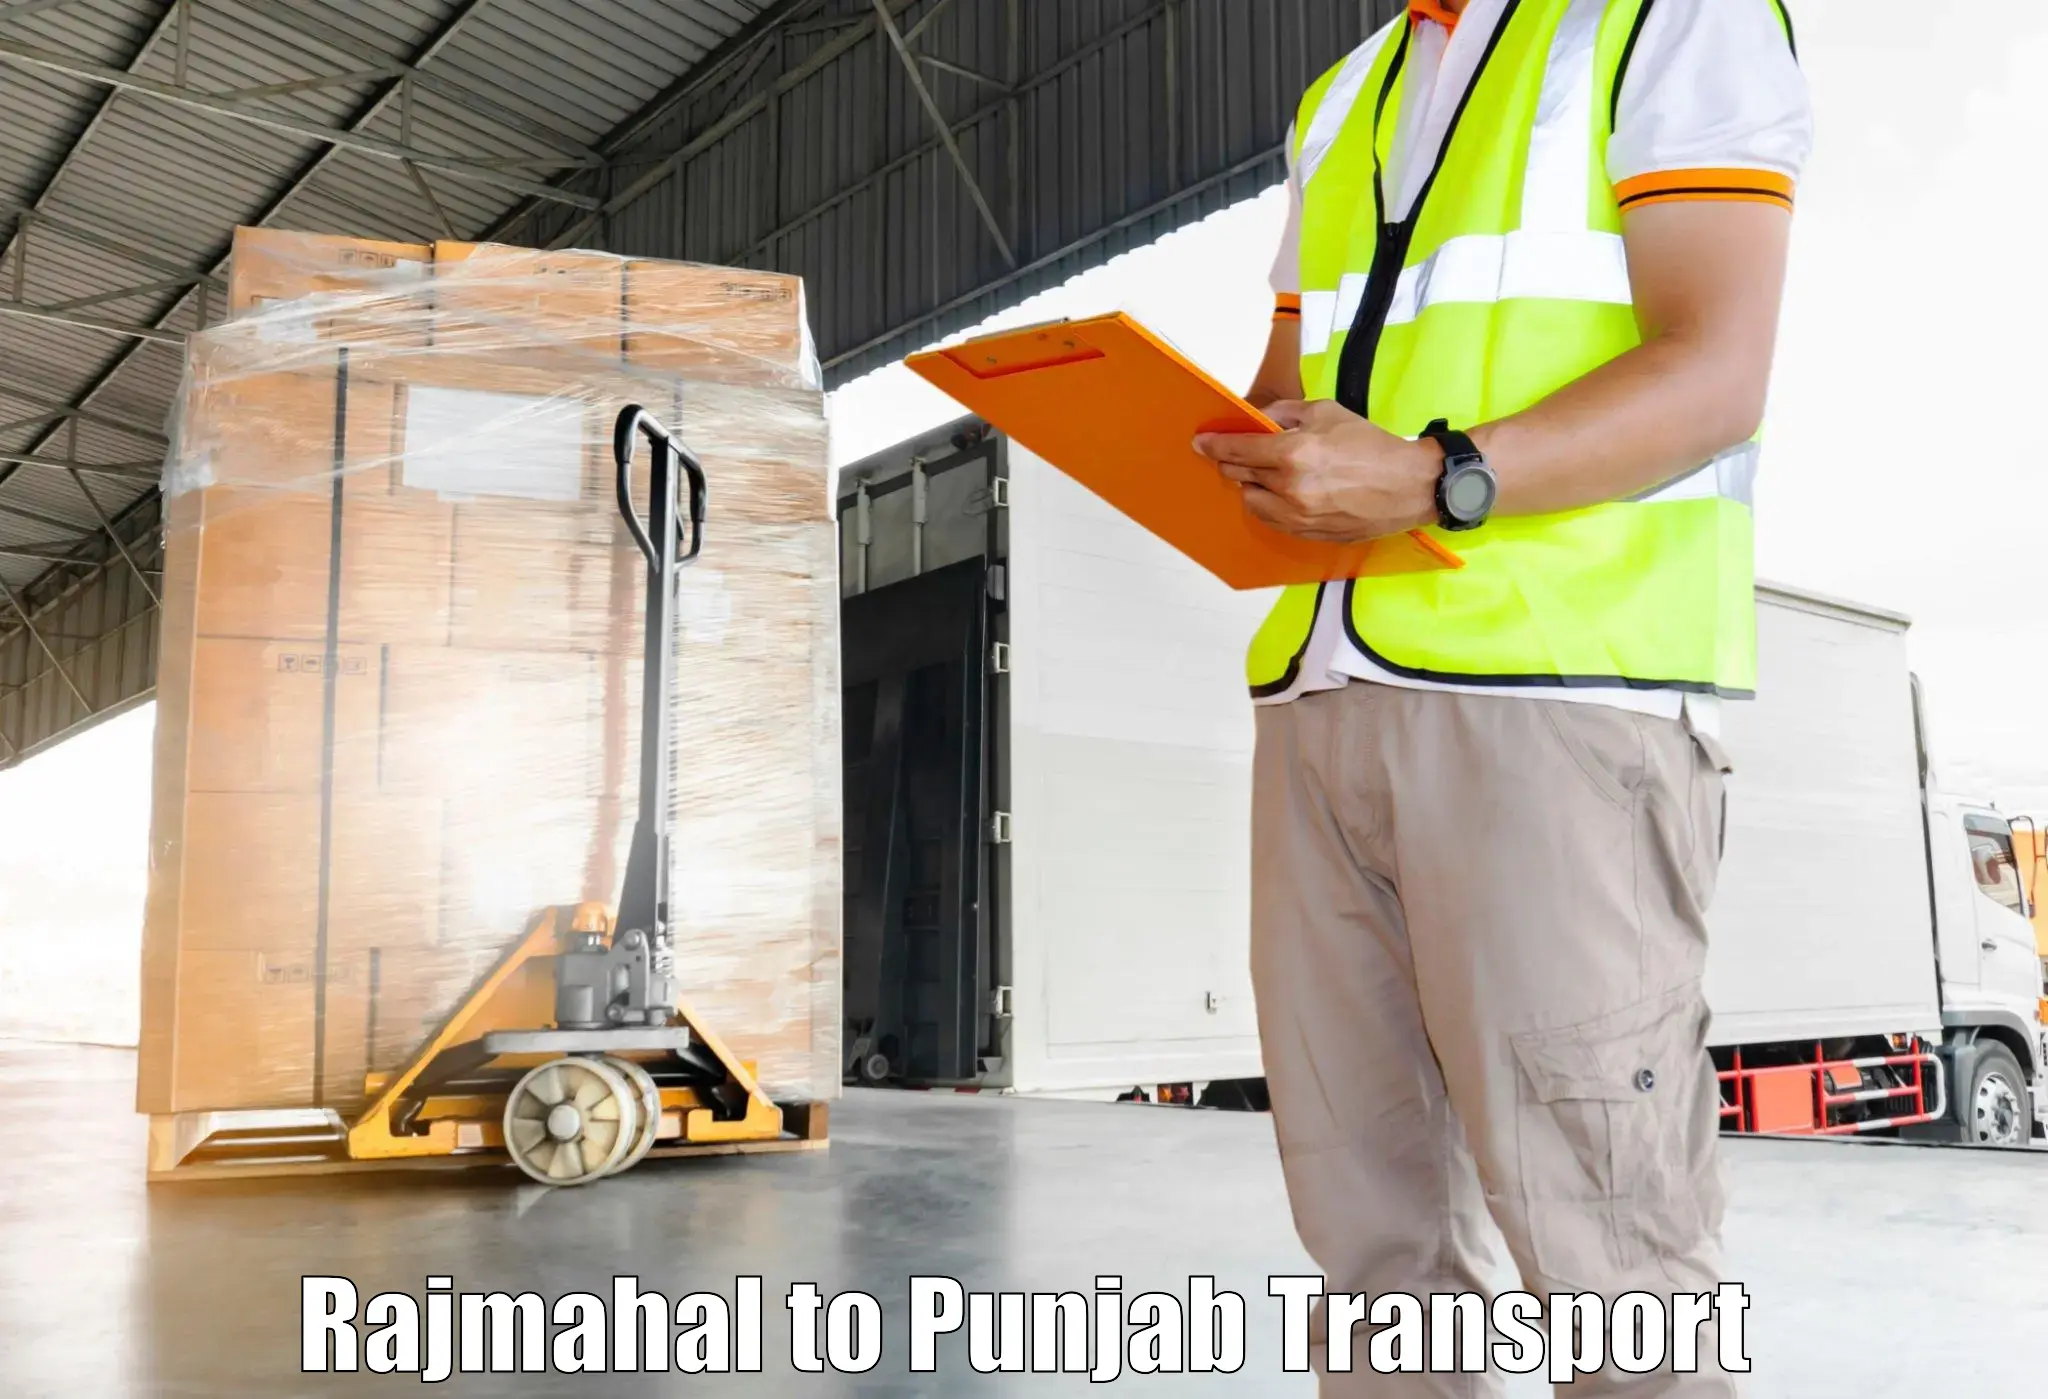 Transport in sharing Rajmahal to Samana